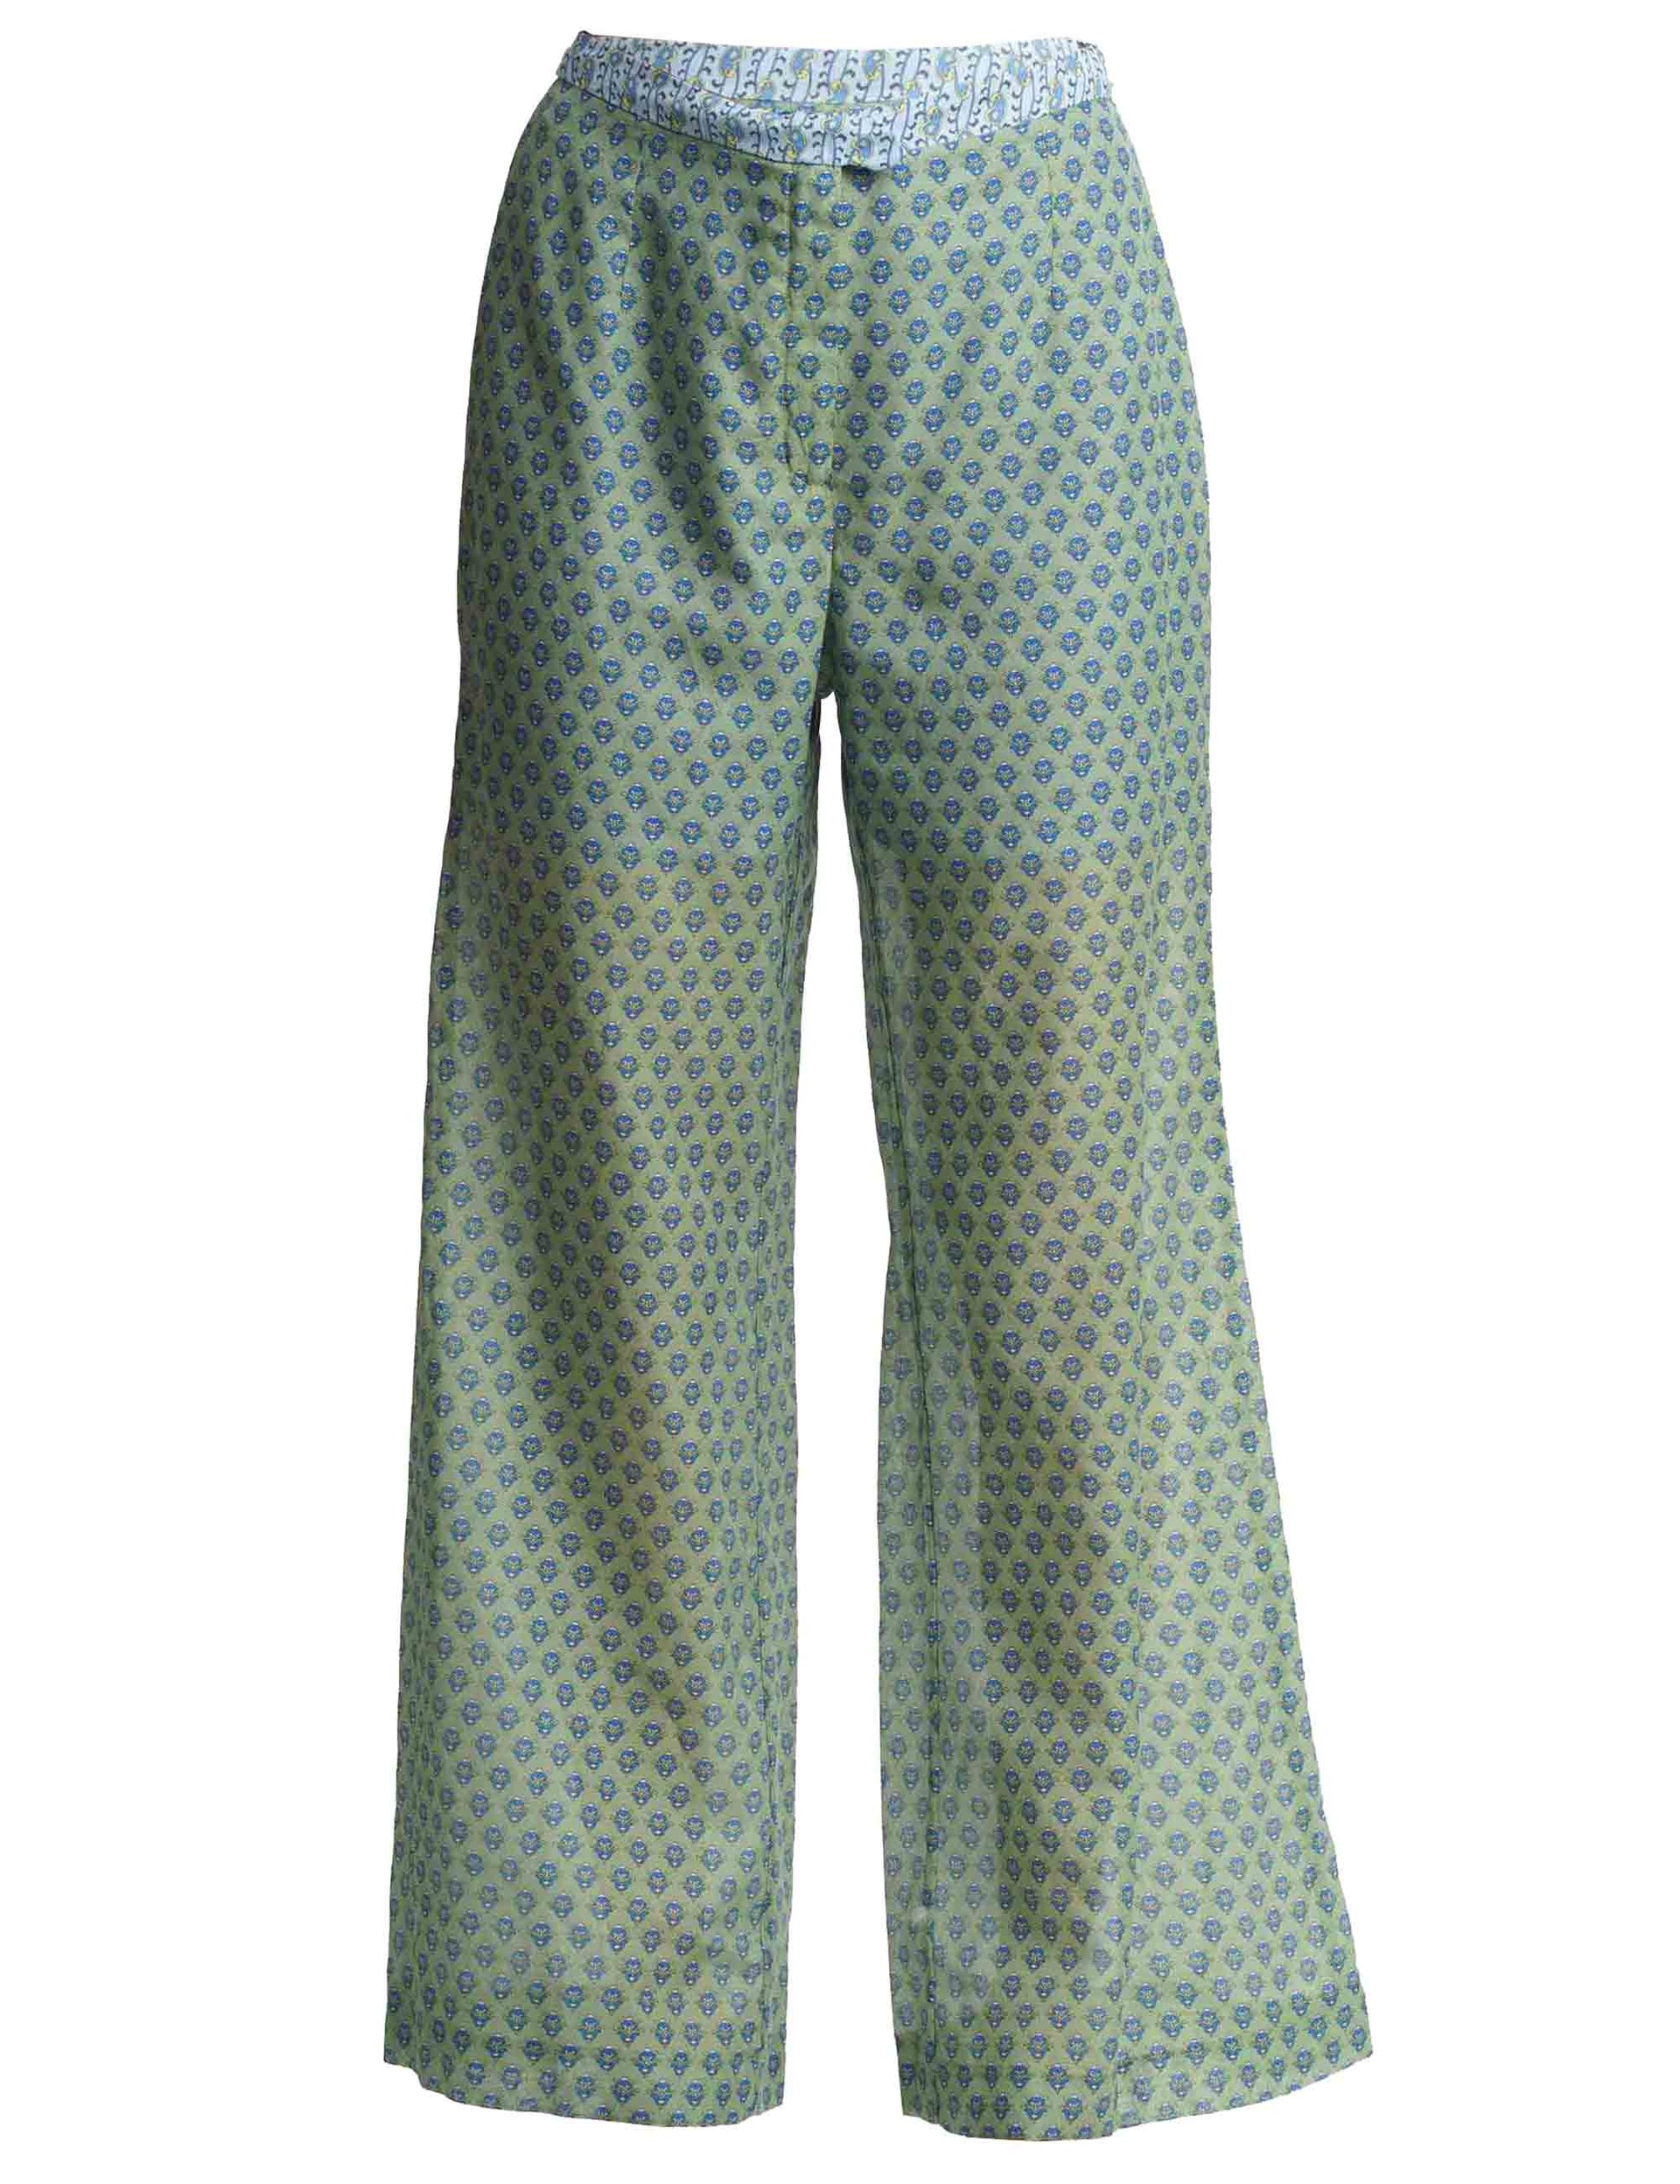 Pantaloni donna Silky Muslin in seta verde